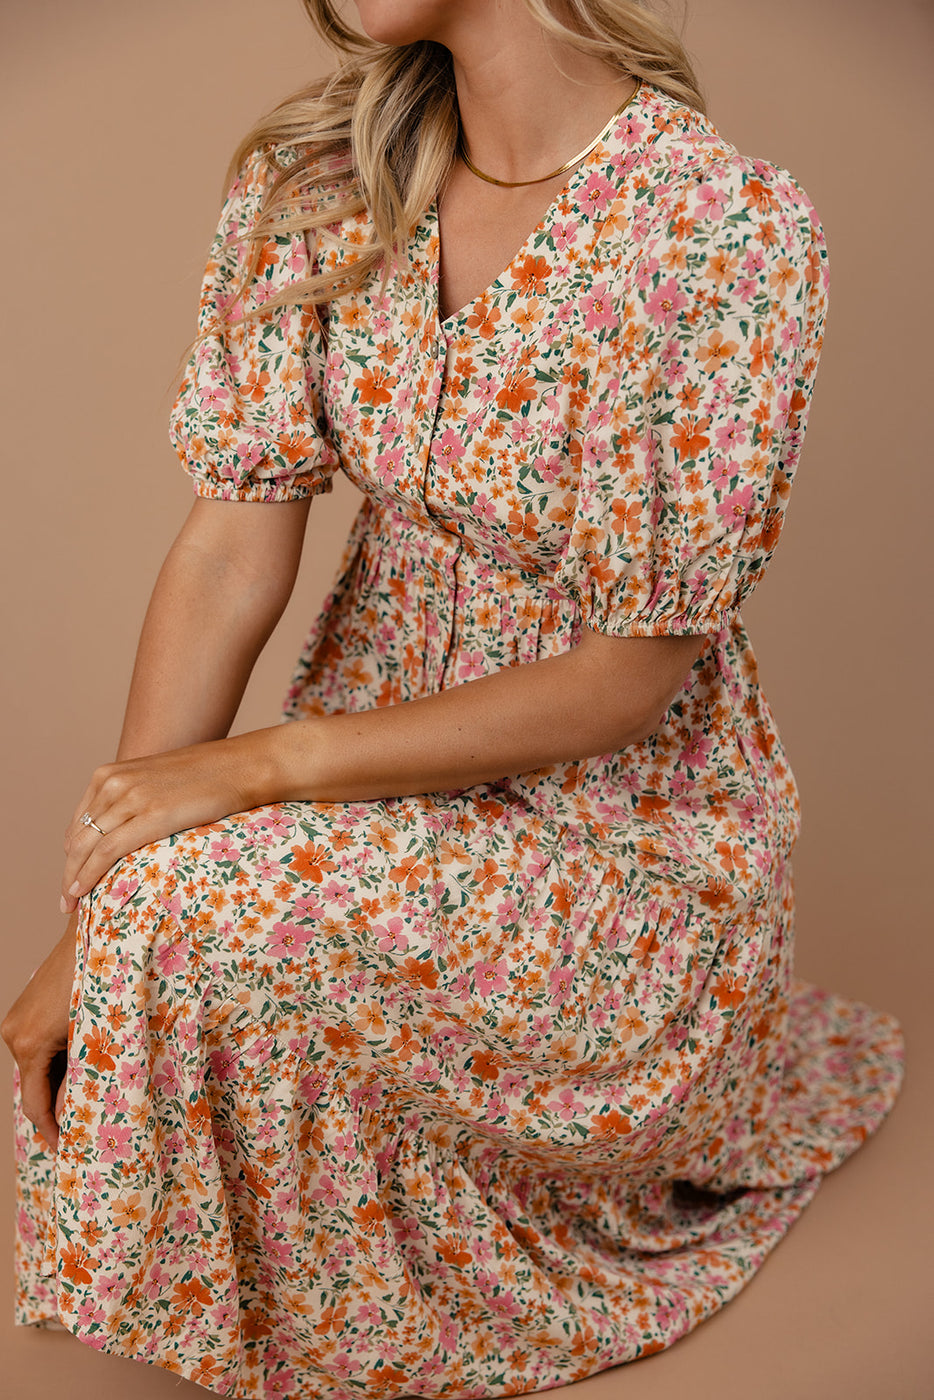 a woman wearing a floral dress